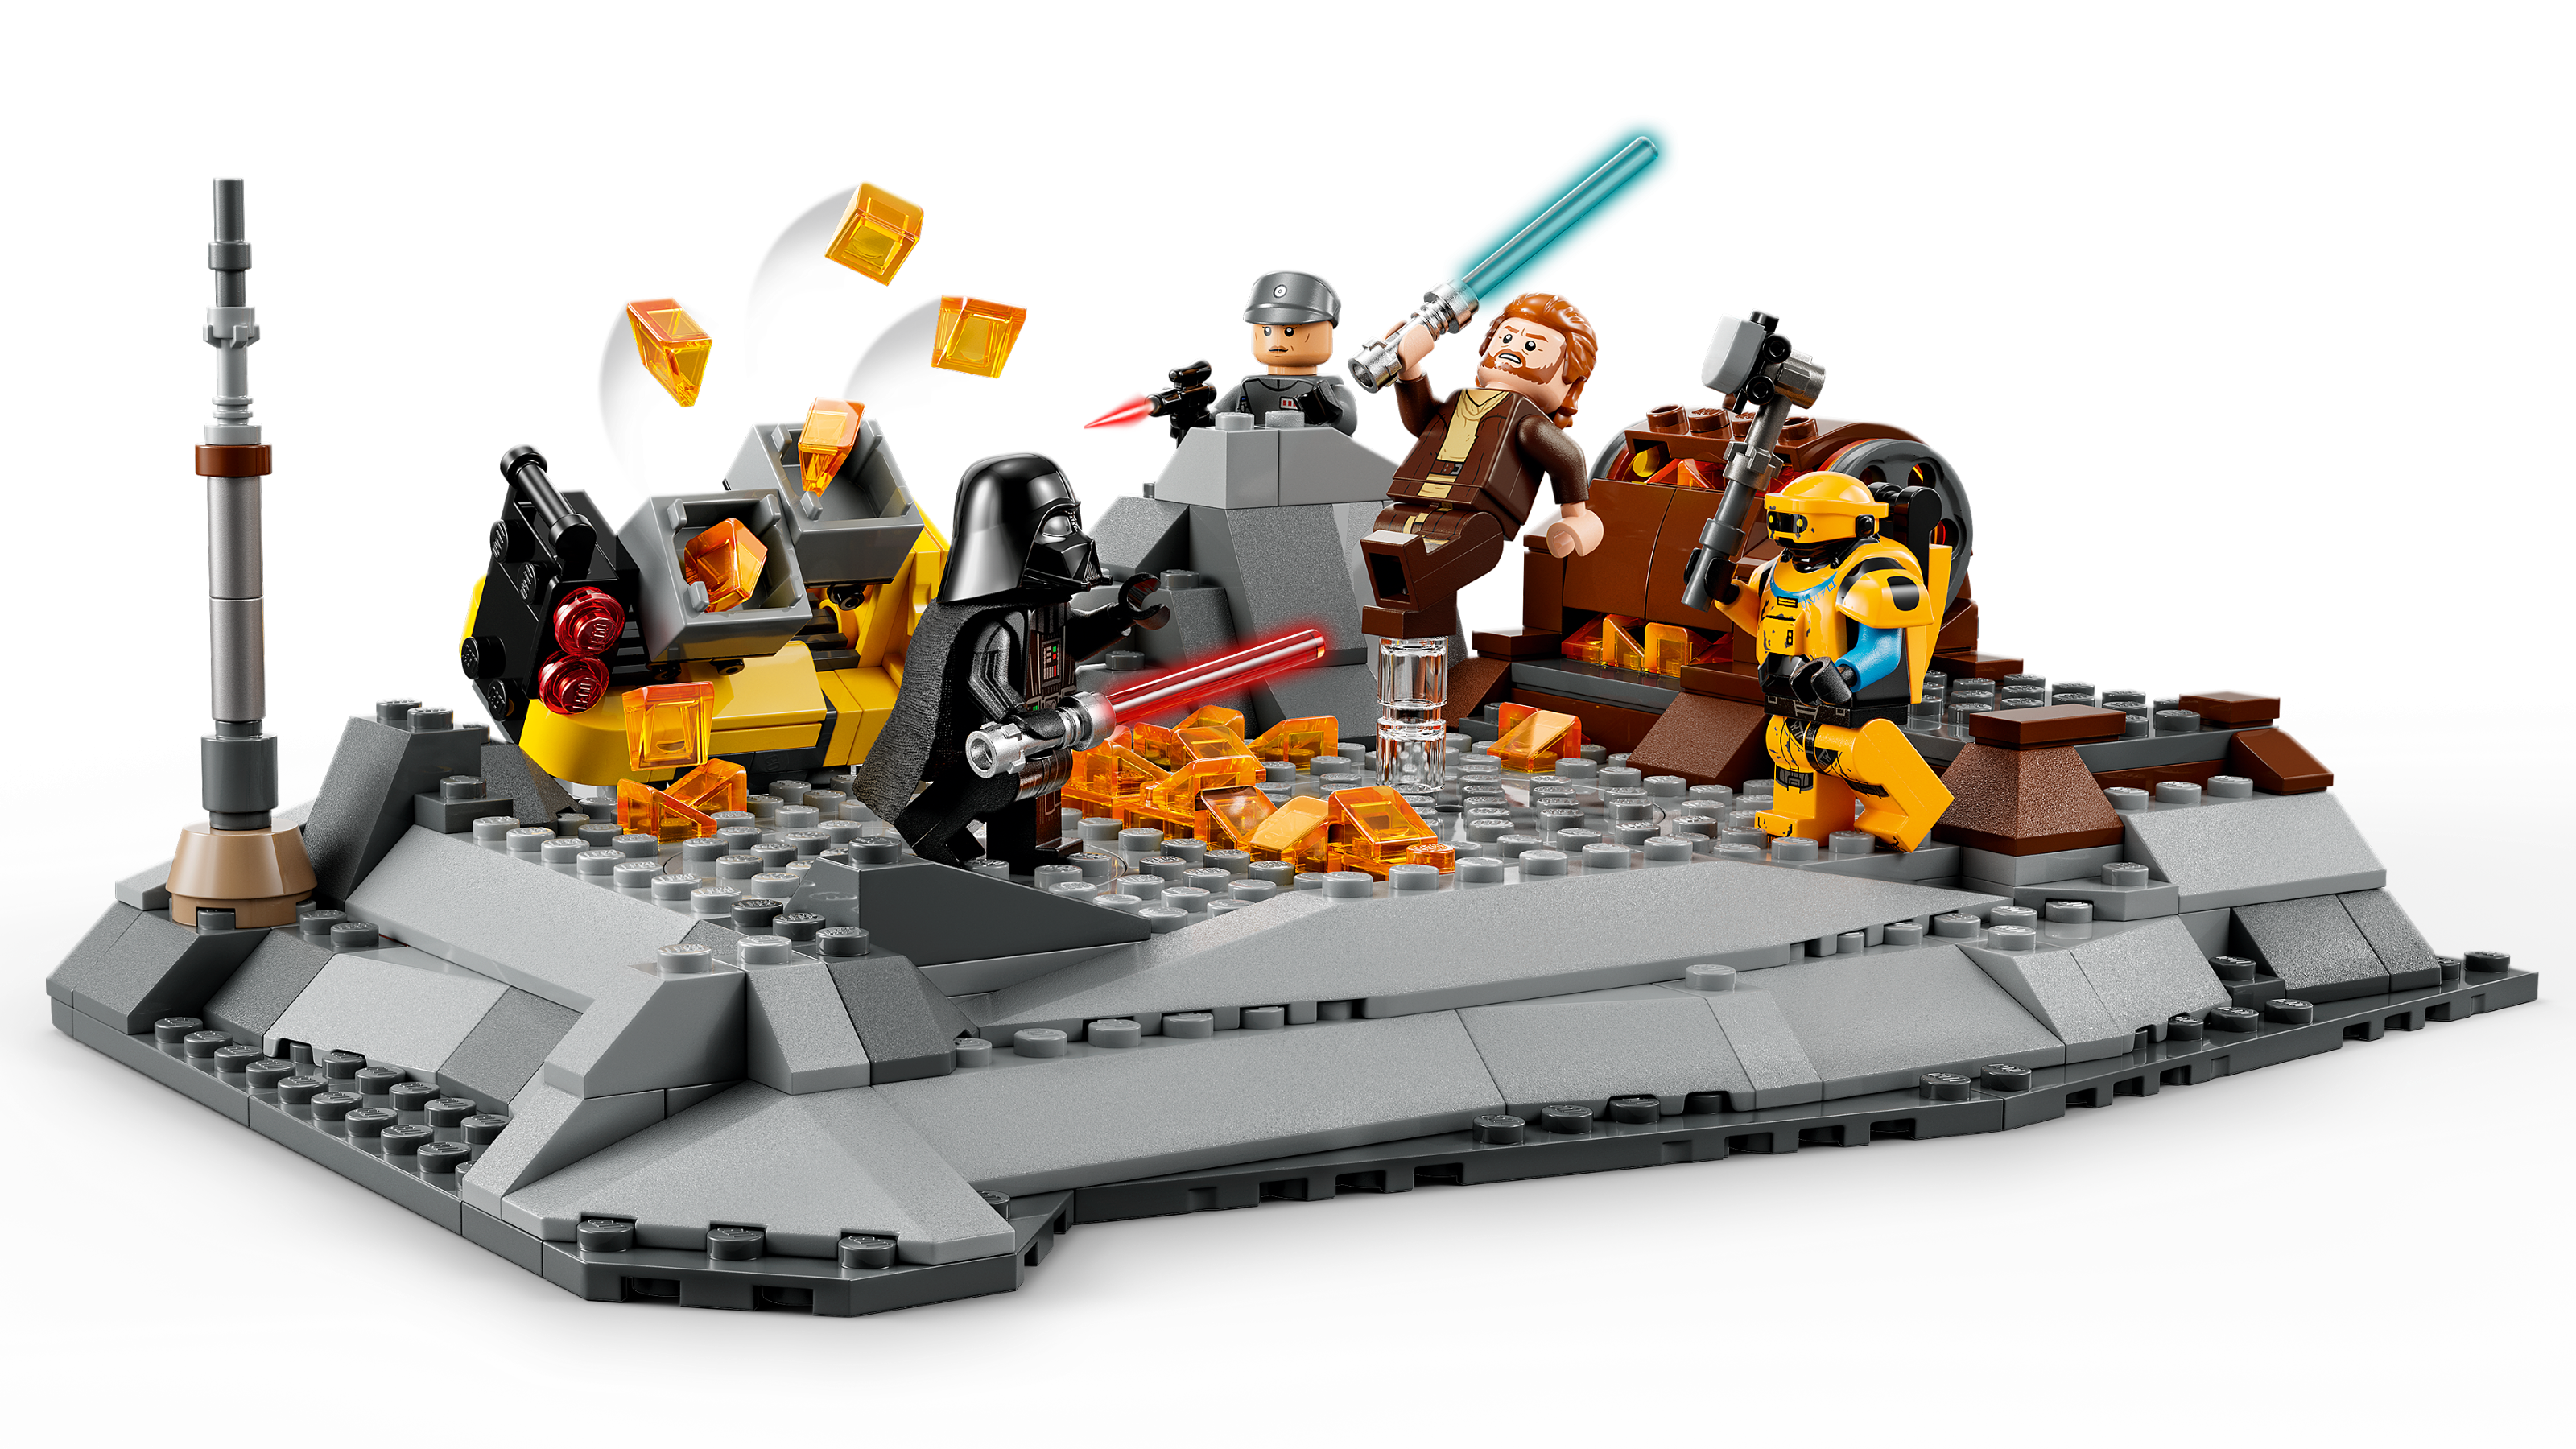 Obi-Wan Kenobi contre Dark Vador LEGO Star Wars 75334